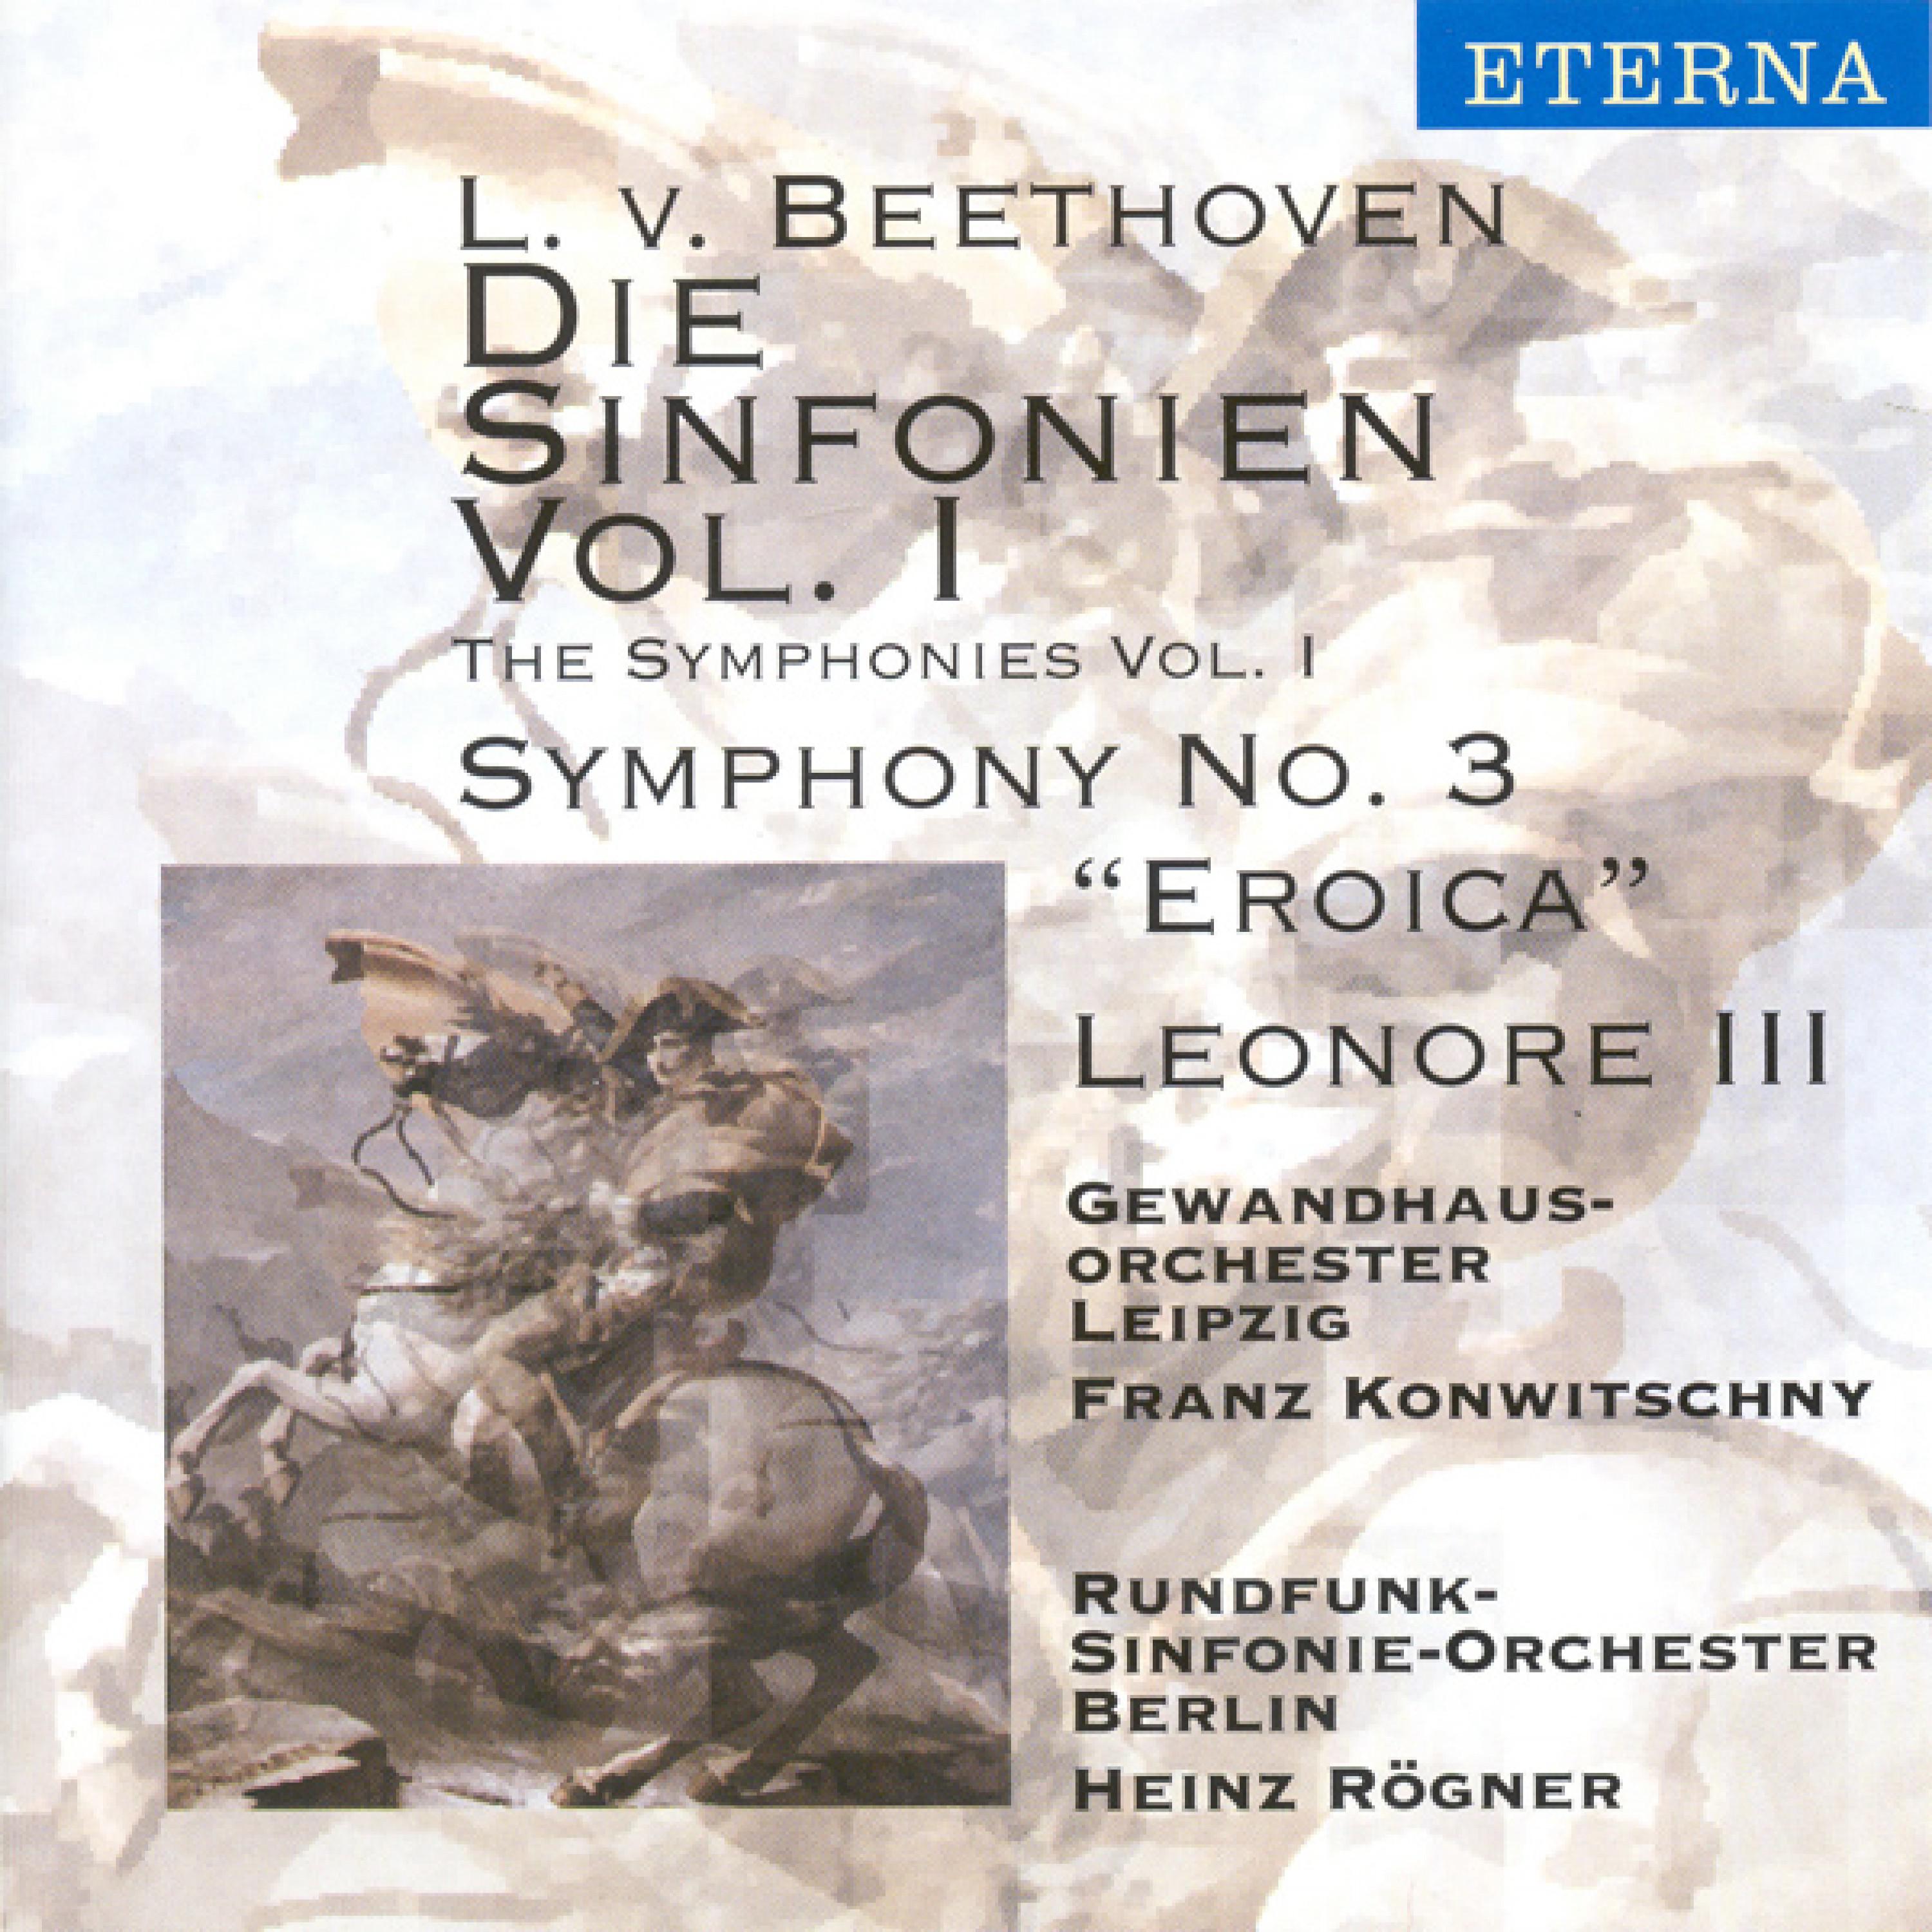 Symphony No. 3 in E-Flat Major Op. 55 "Eroica": I. Allegro con brio